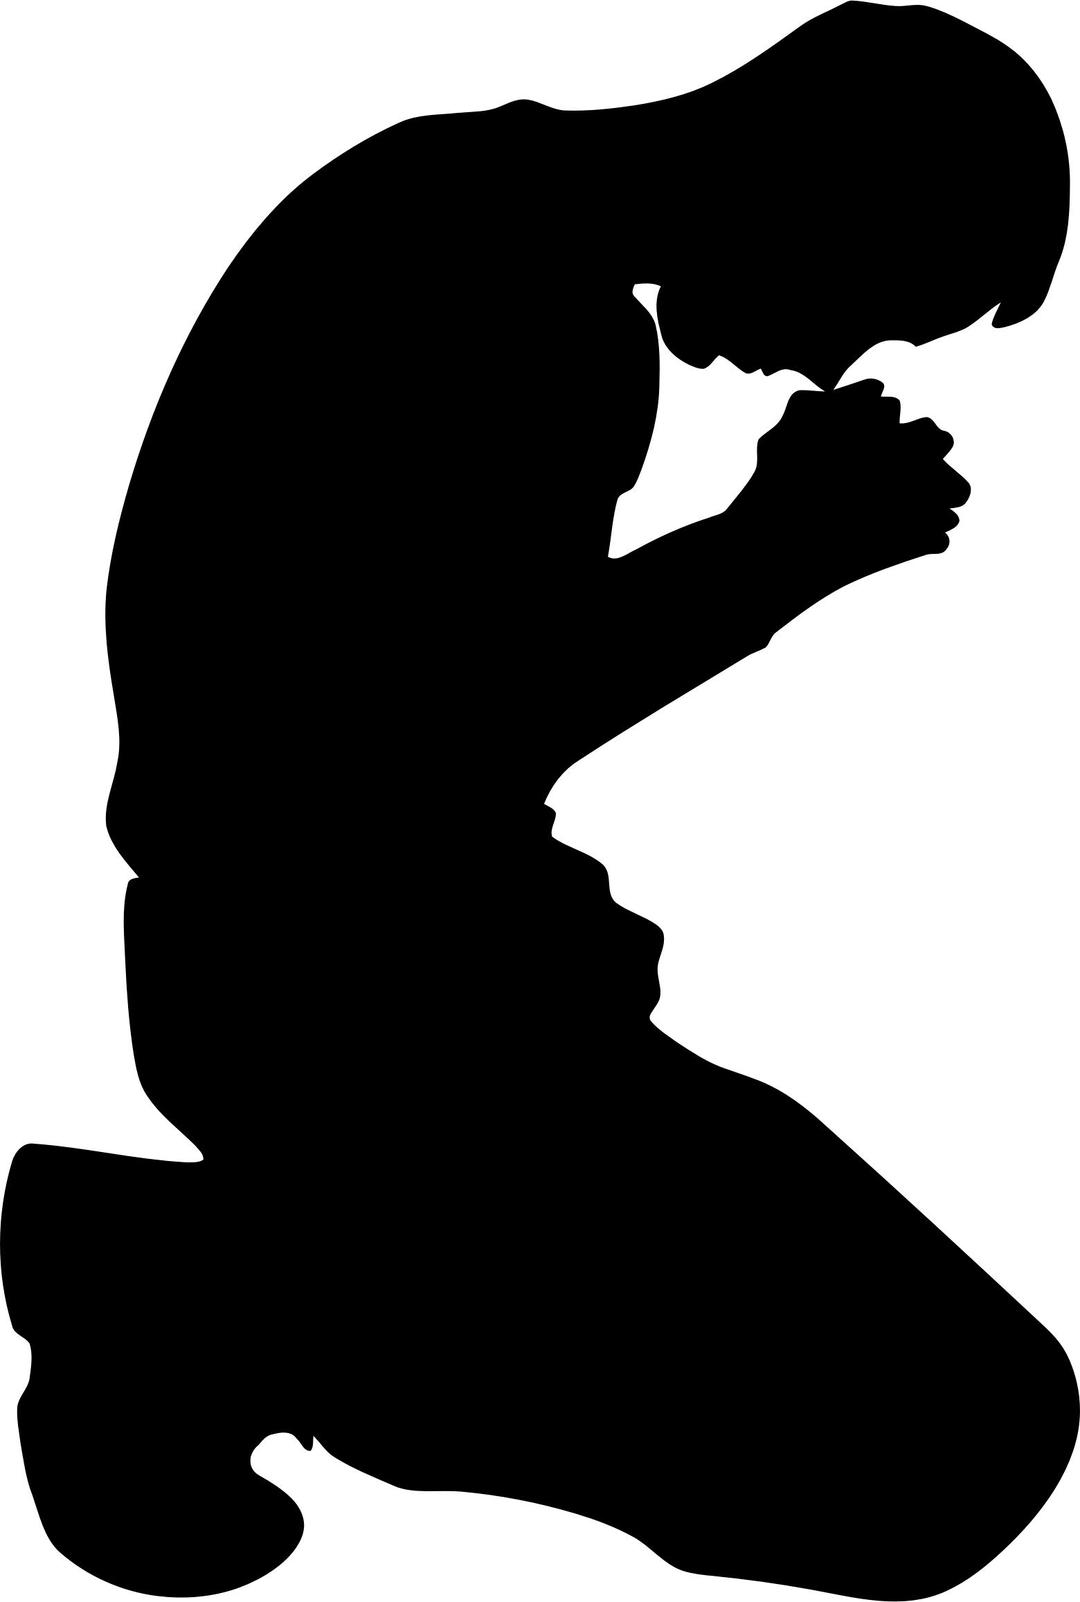 Man Kneeling In Prayer Minus Ground Silhouette png transparent